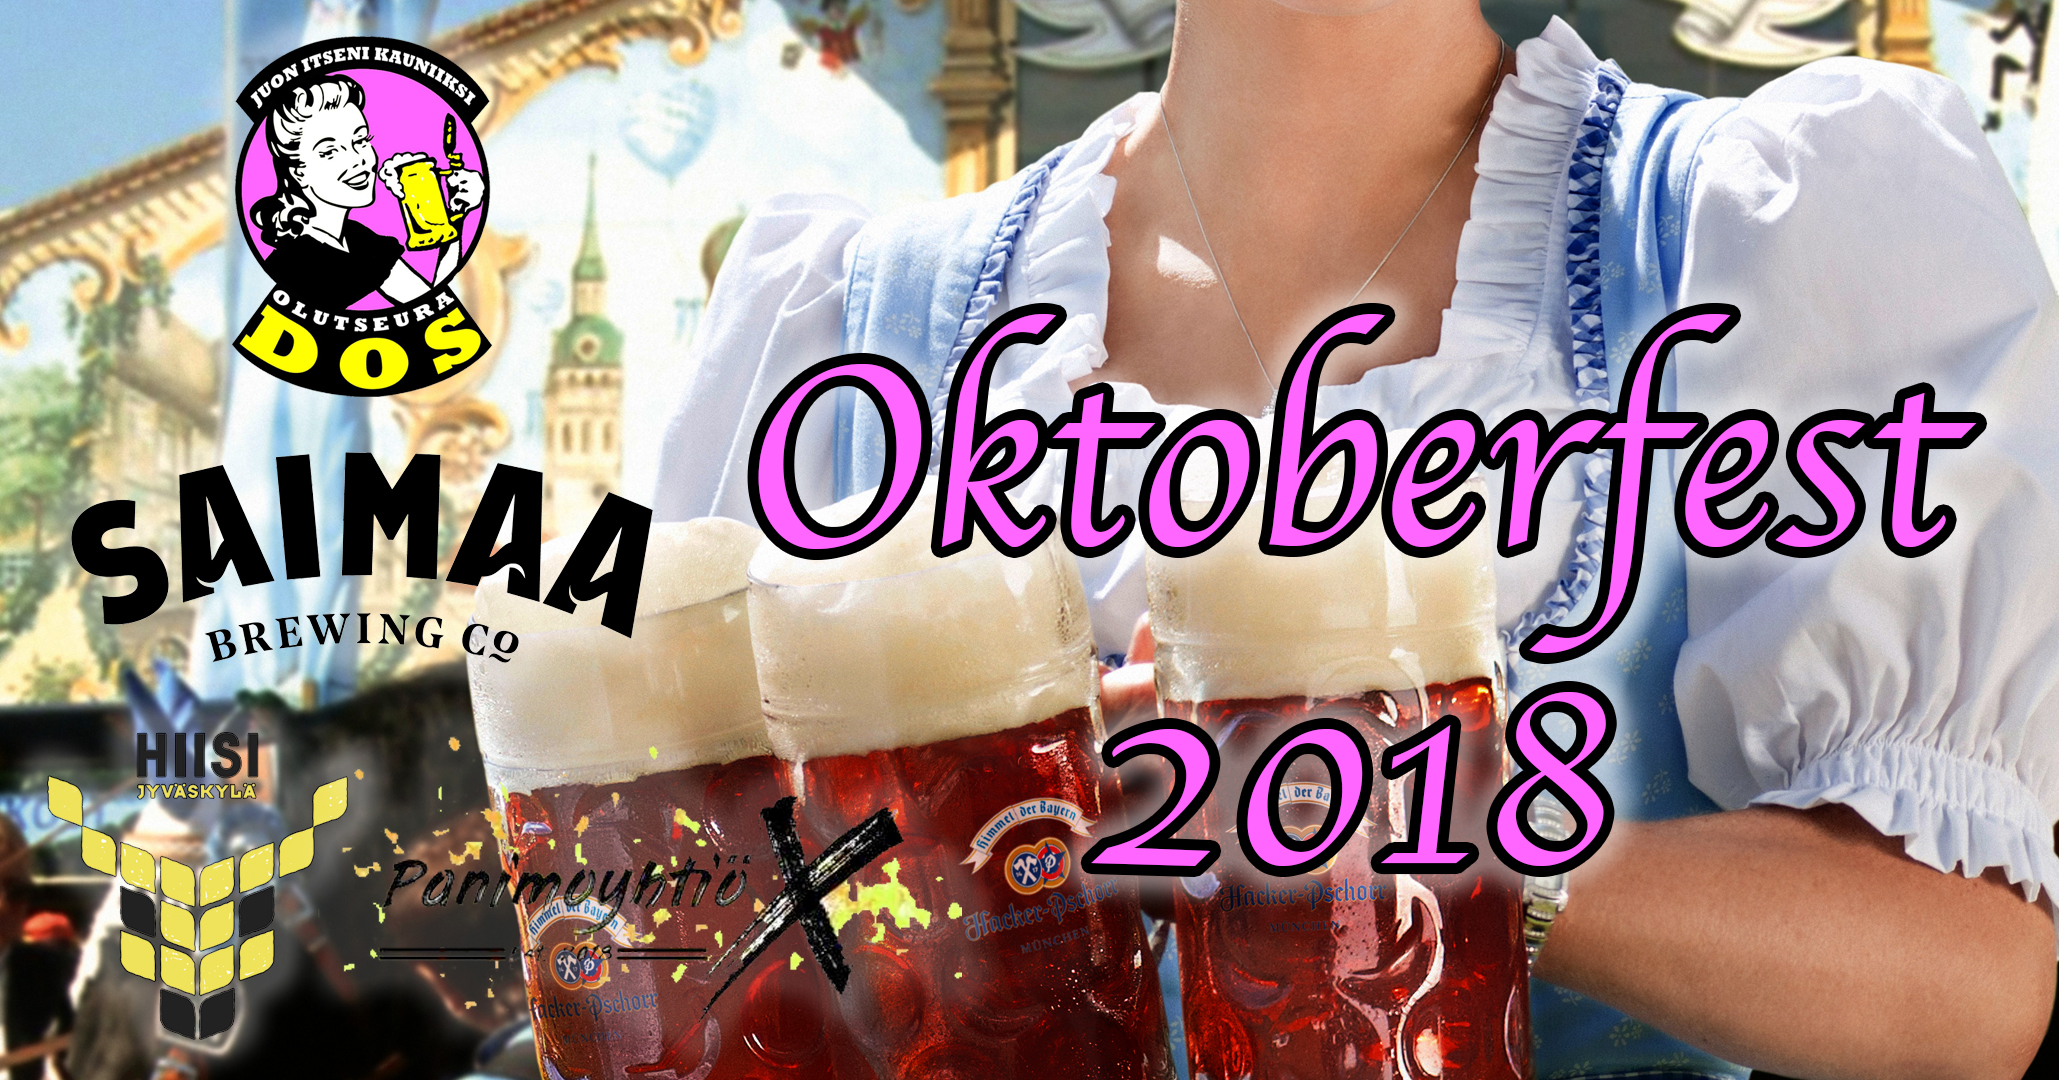 Olutseura DOSin Oktoberfest 2018